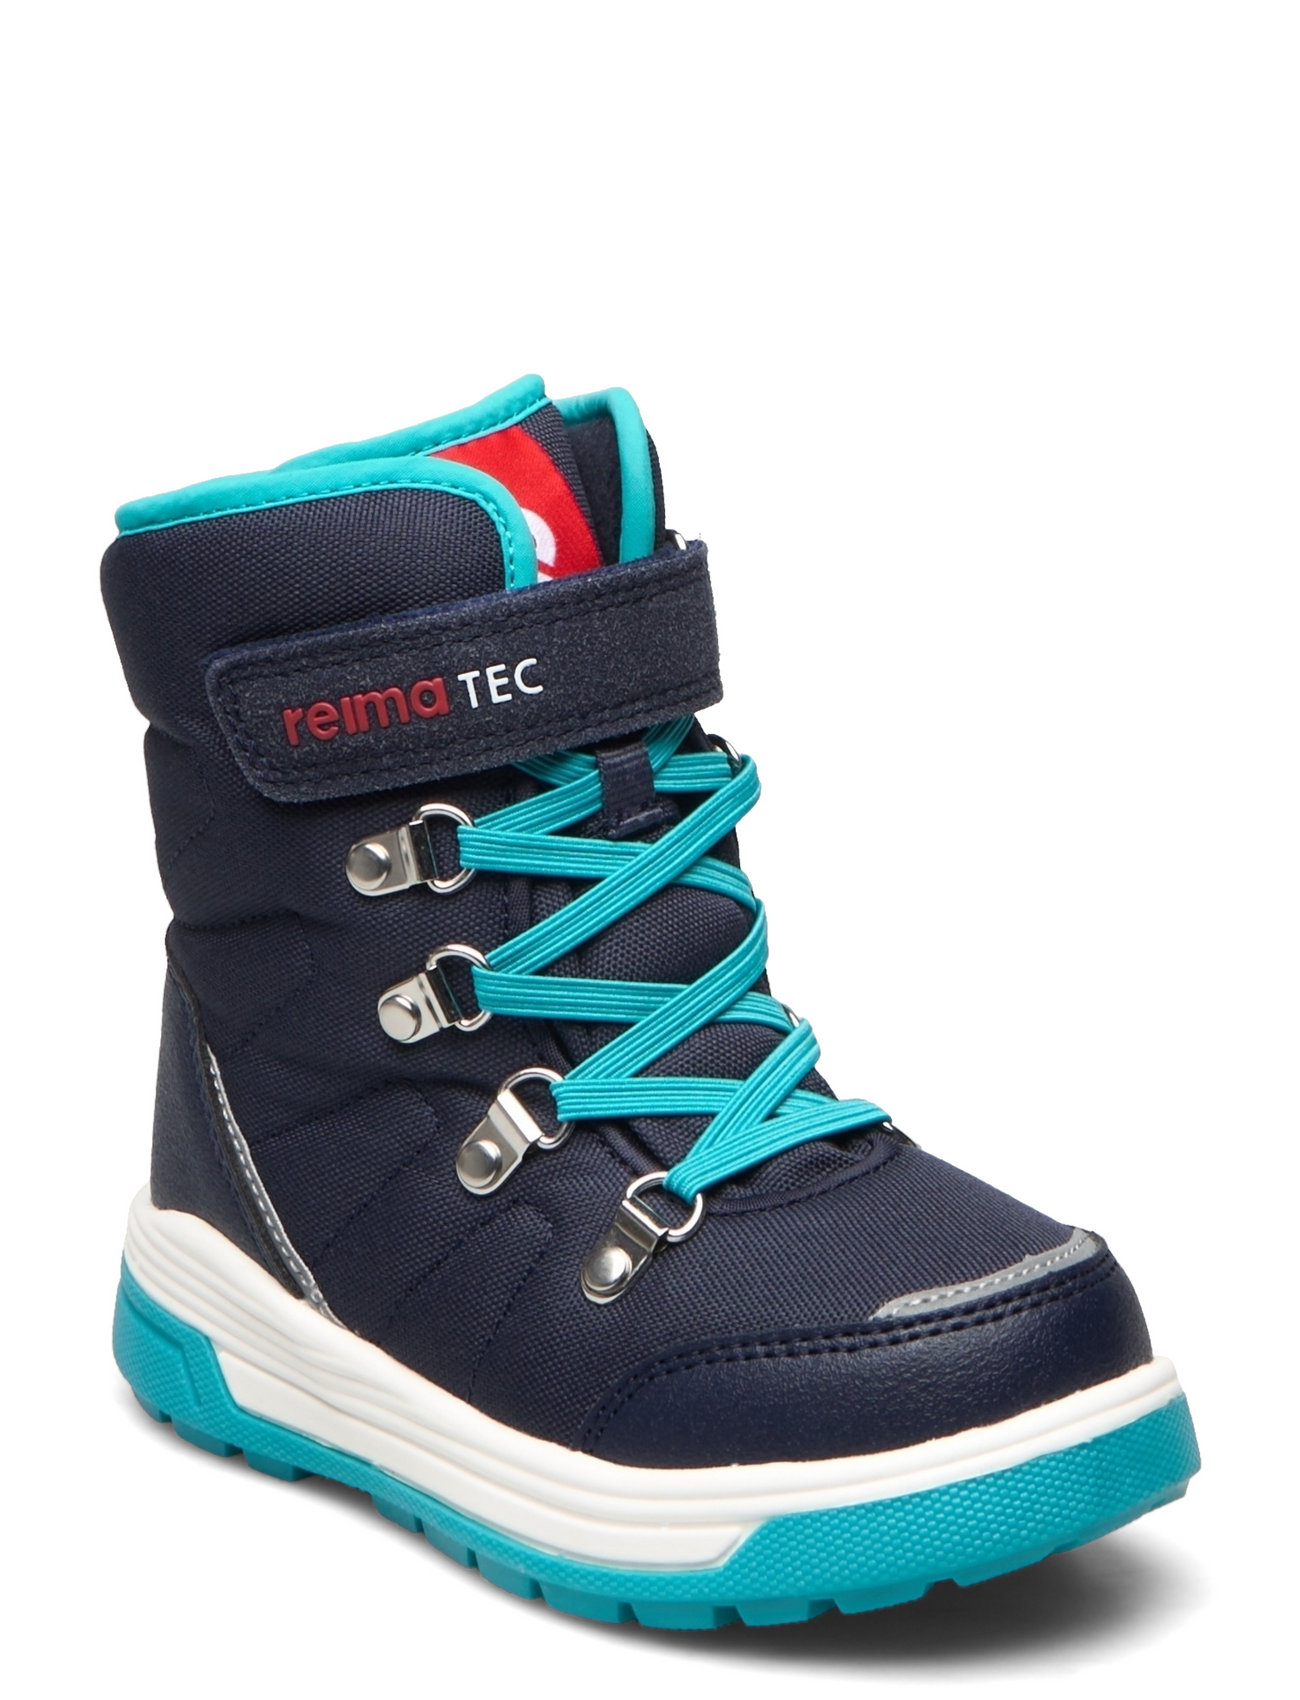 Reima Winter Shoes Quicker - Boozt.com